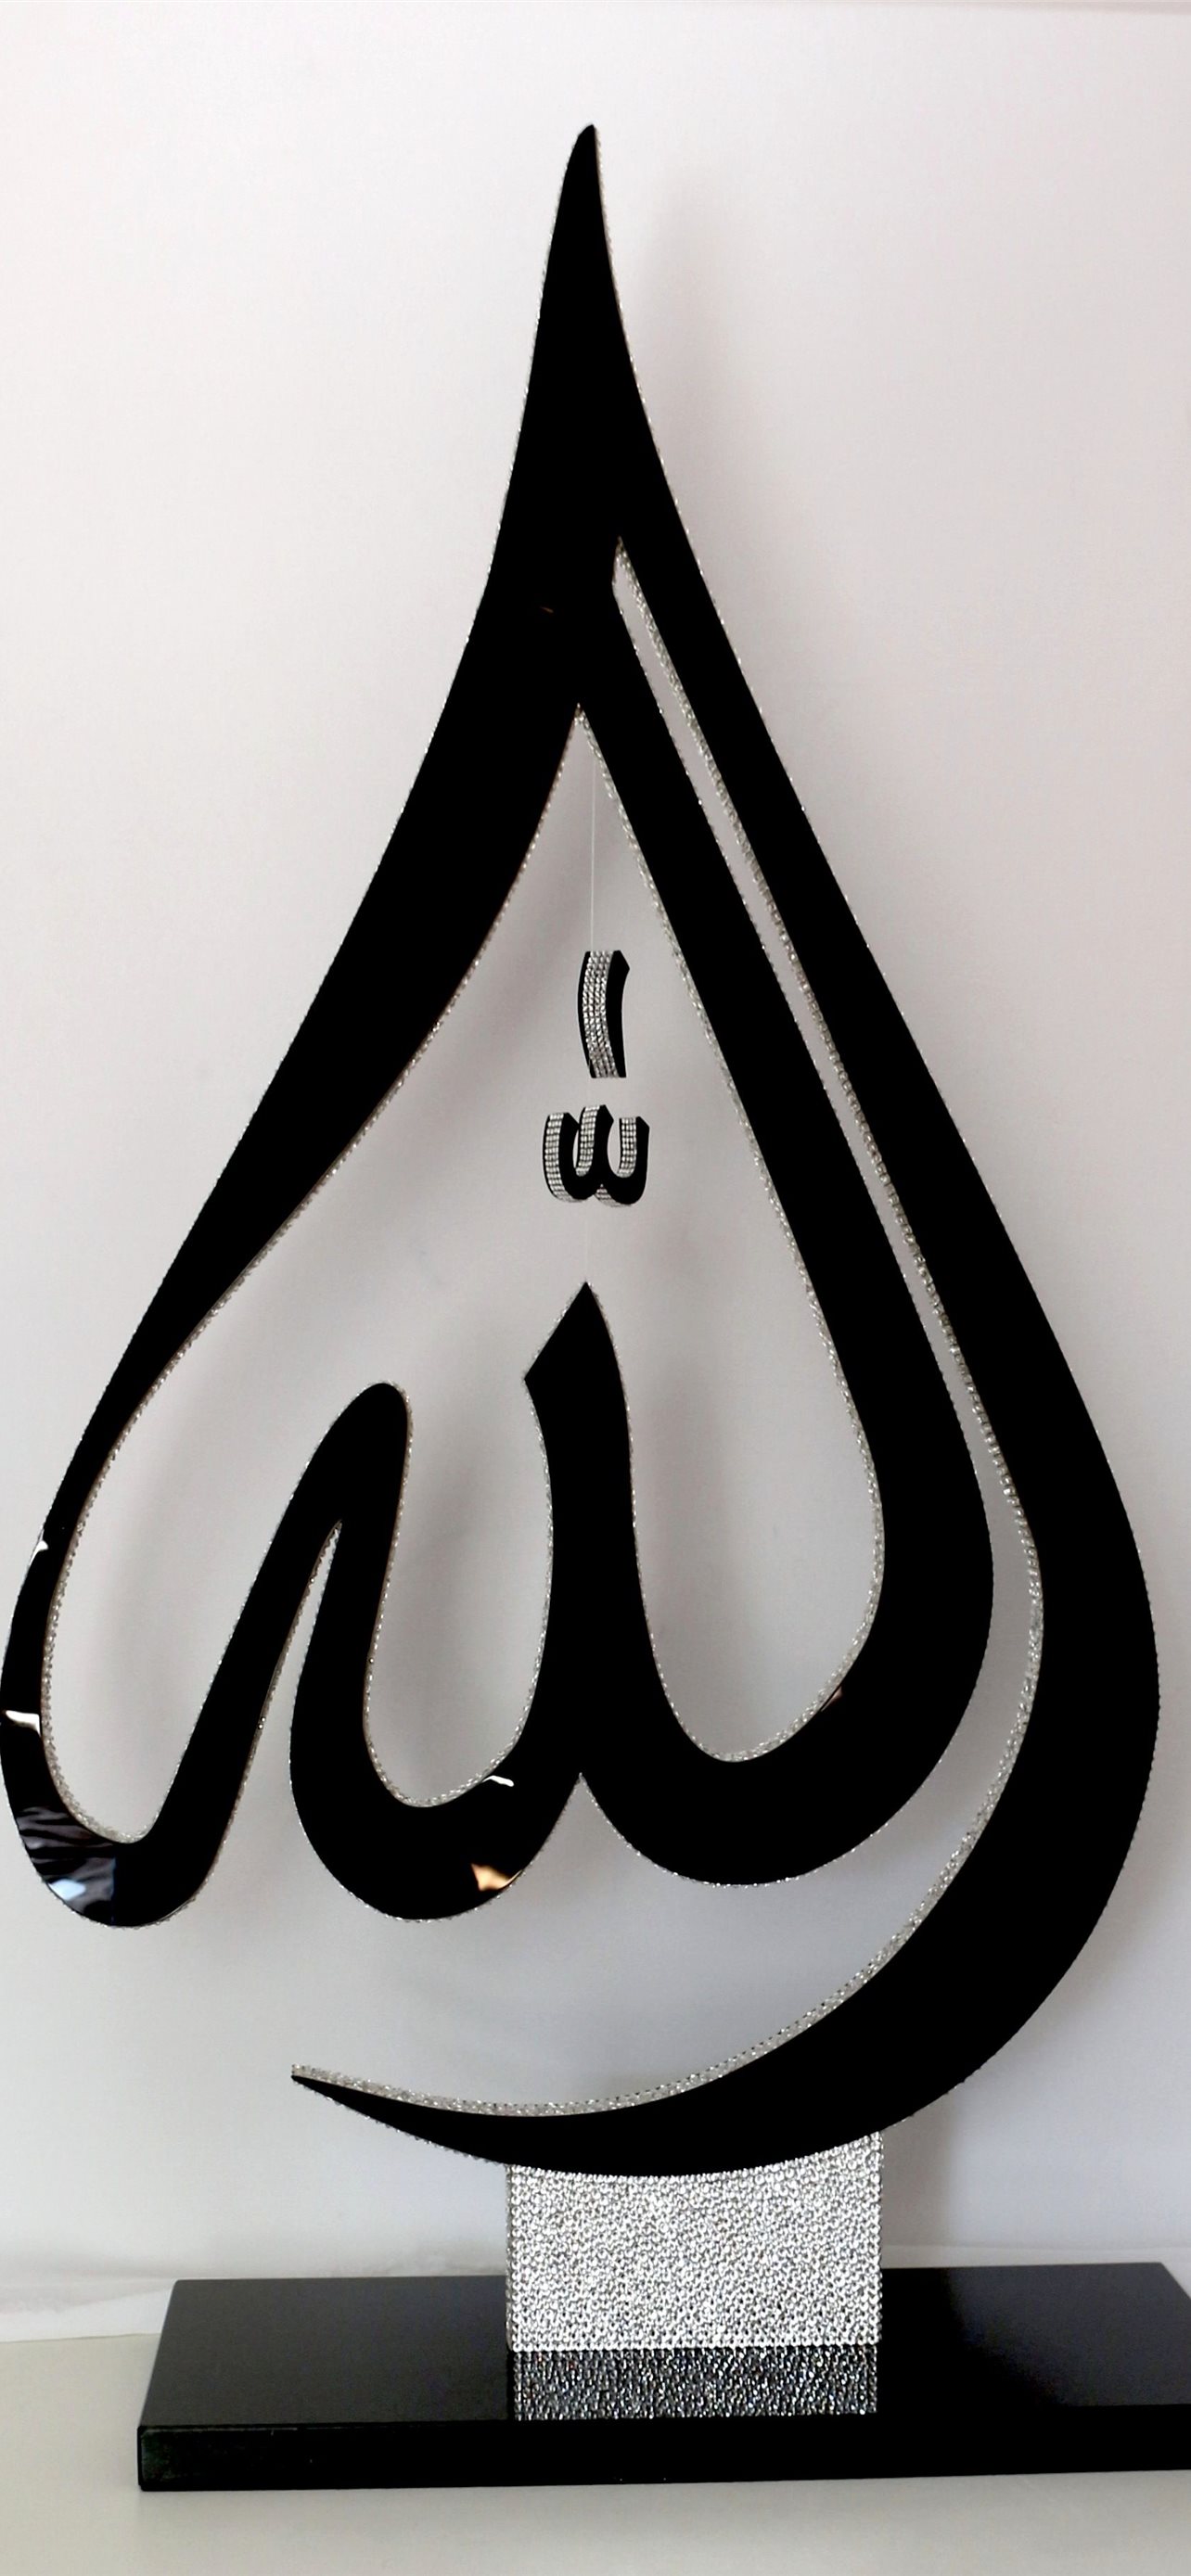 Allah Sculpture with Swarovski crystal iPhone wallpaper 